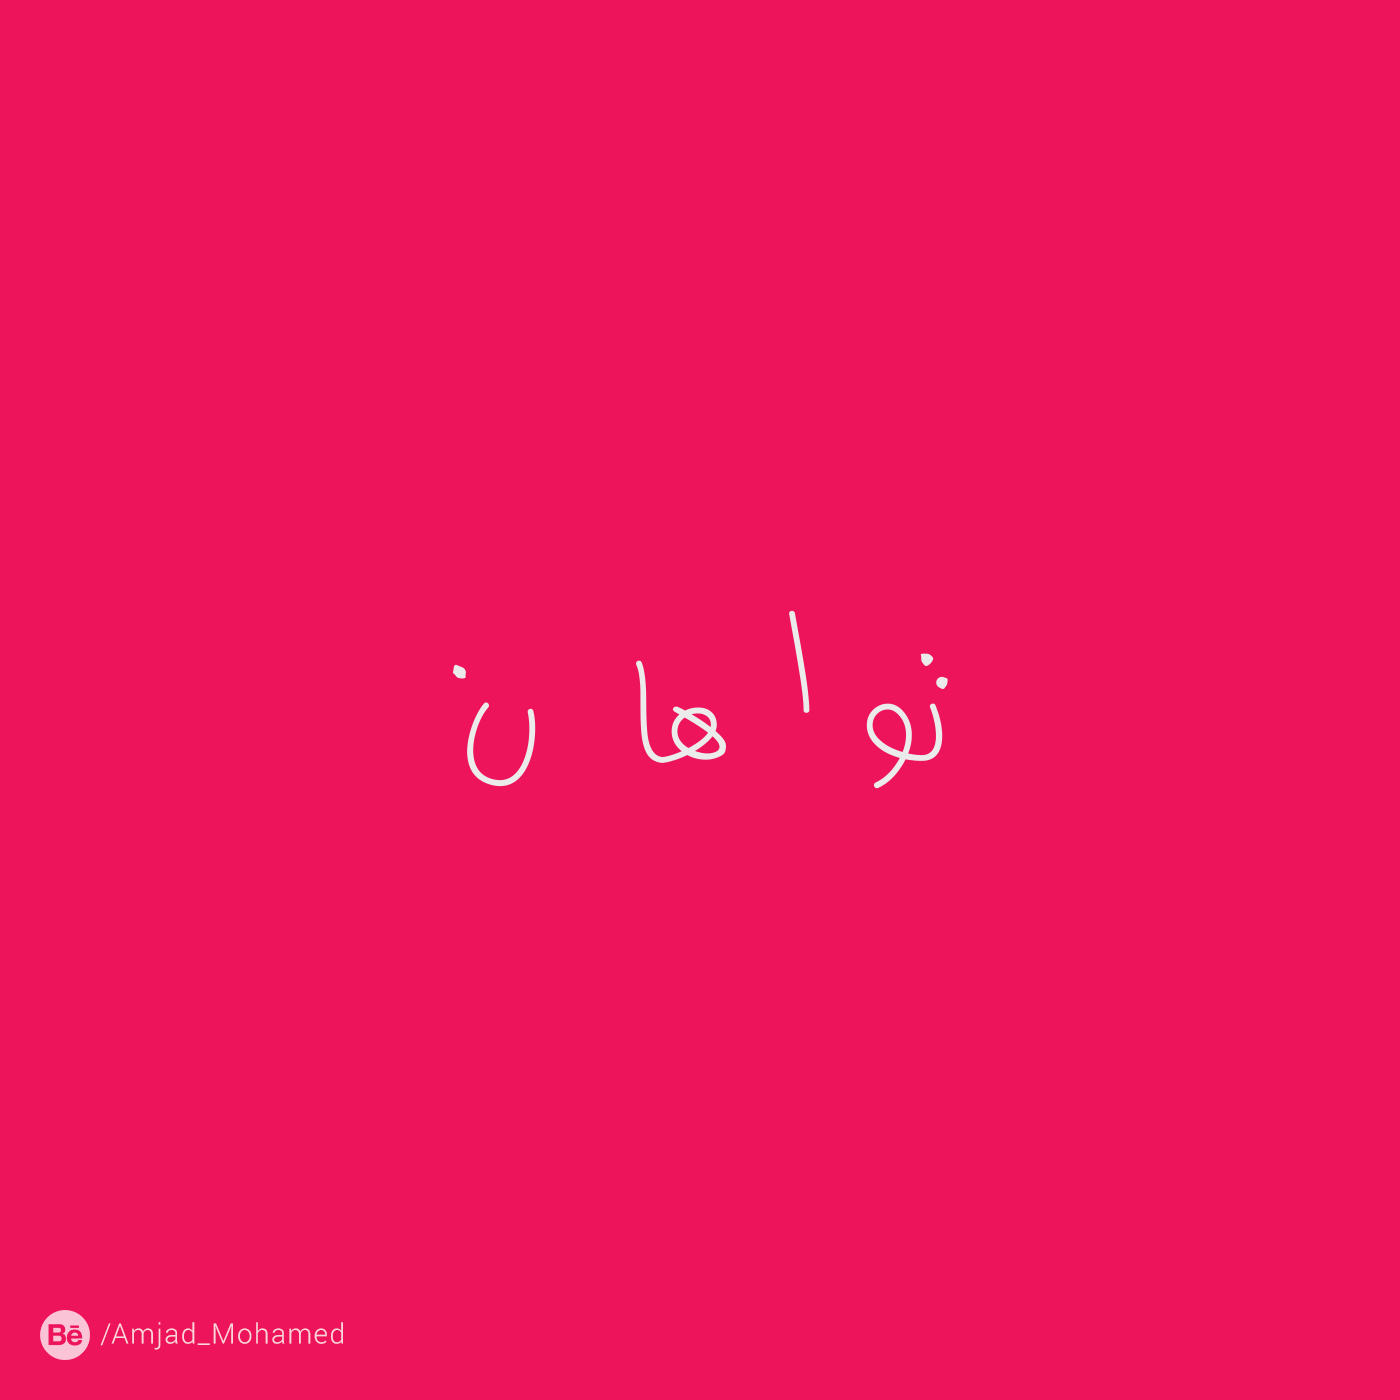 arabic words image creative logos ideas 100_Arabic_words_as_image 100_words_as_image designs minimalist new font